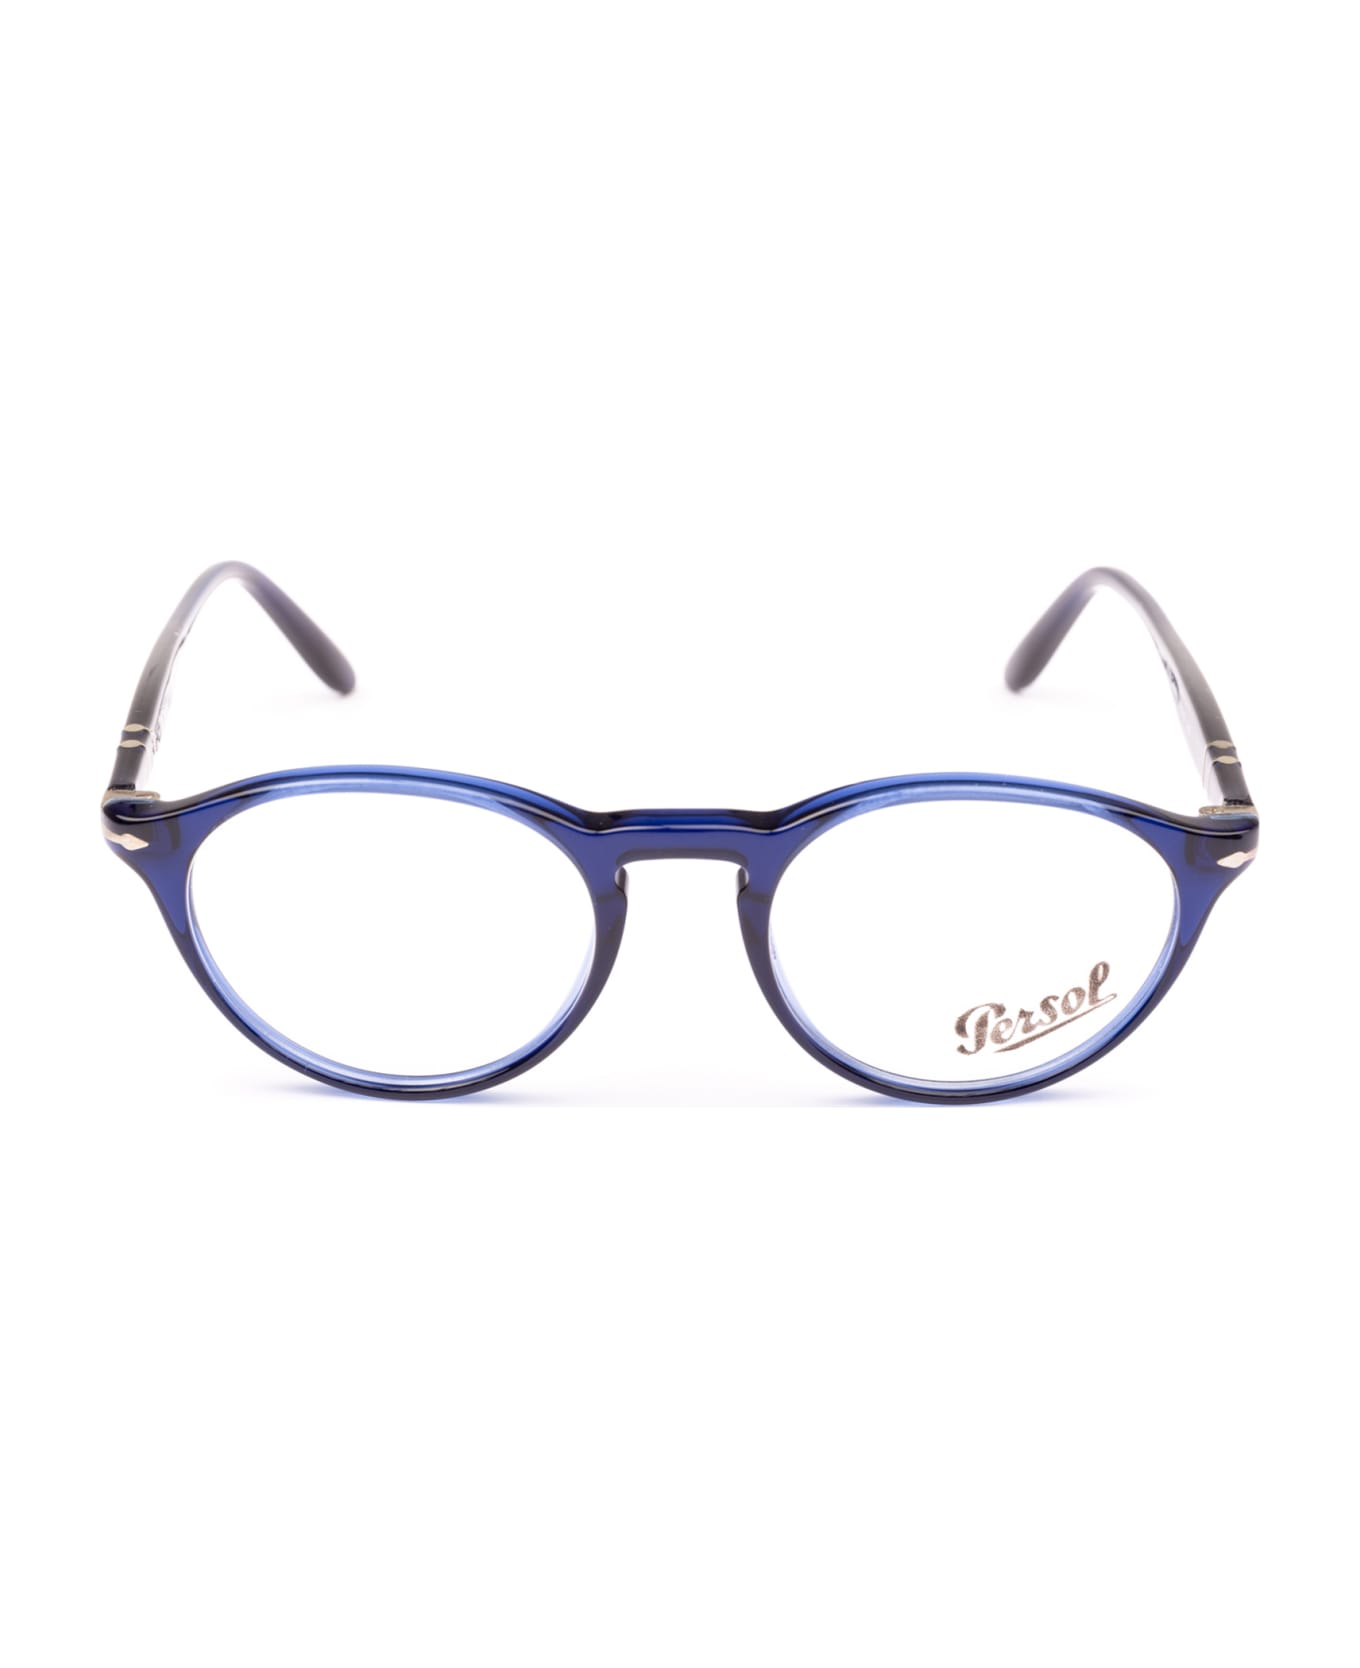 Persol Po3092v Cobalto Glasses - COBALTO